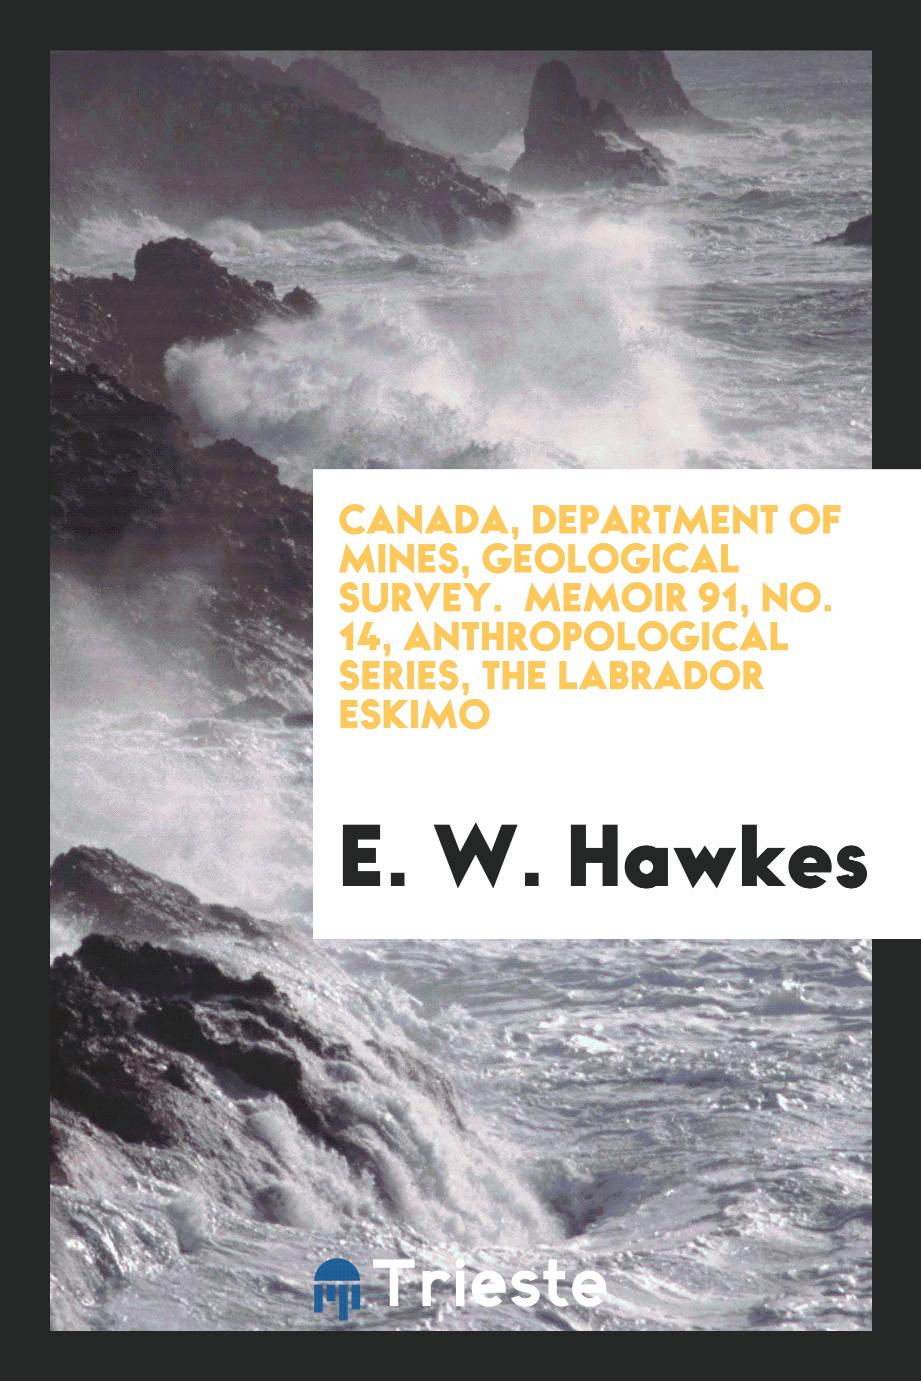 Canada, Department of mines, Geological survey. Memoir 91, No. 14, anthropological series, The Labrador Eskimo